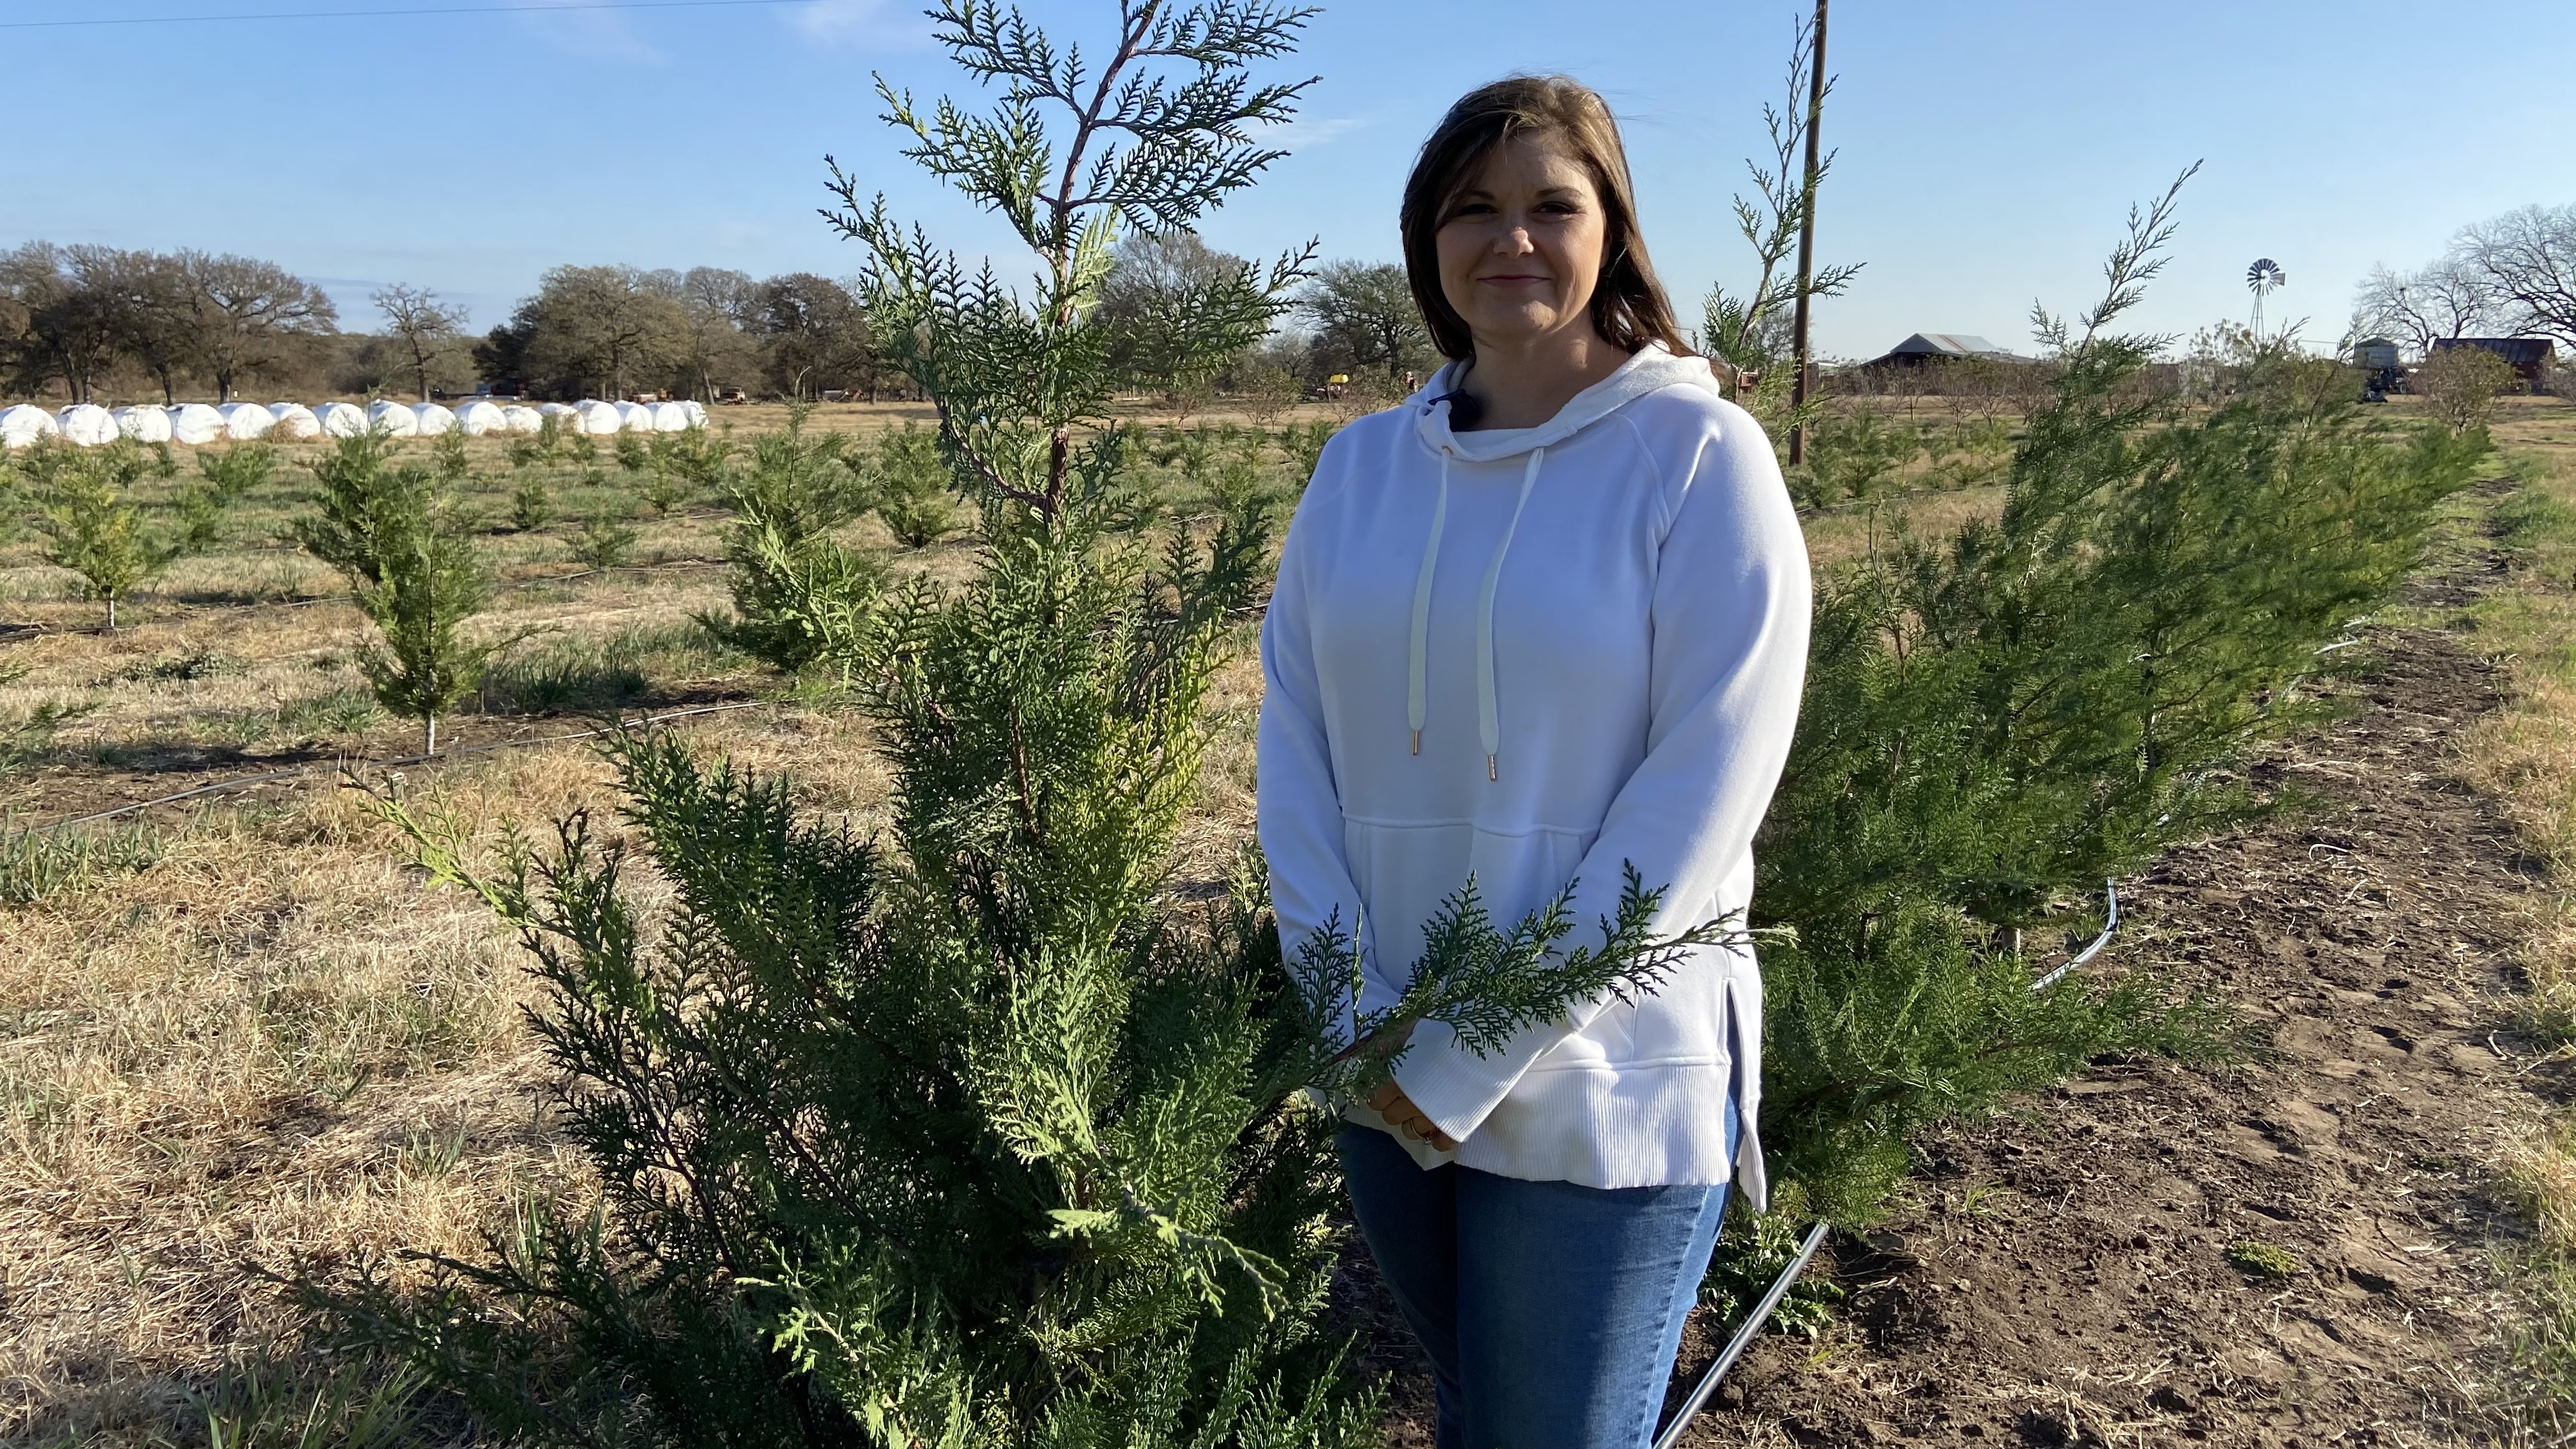 Lindsey Jenschke stands near young Christmas trees at Jenschke Orchards in Fredricksburg, Texas. (Spectrum News 1)